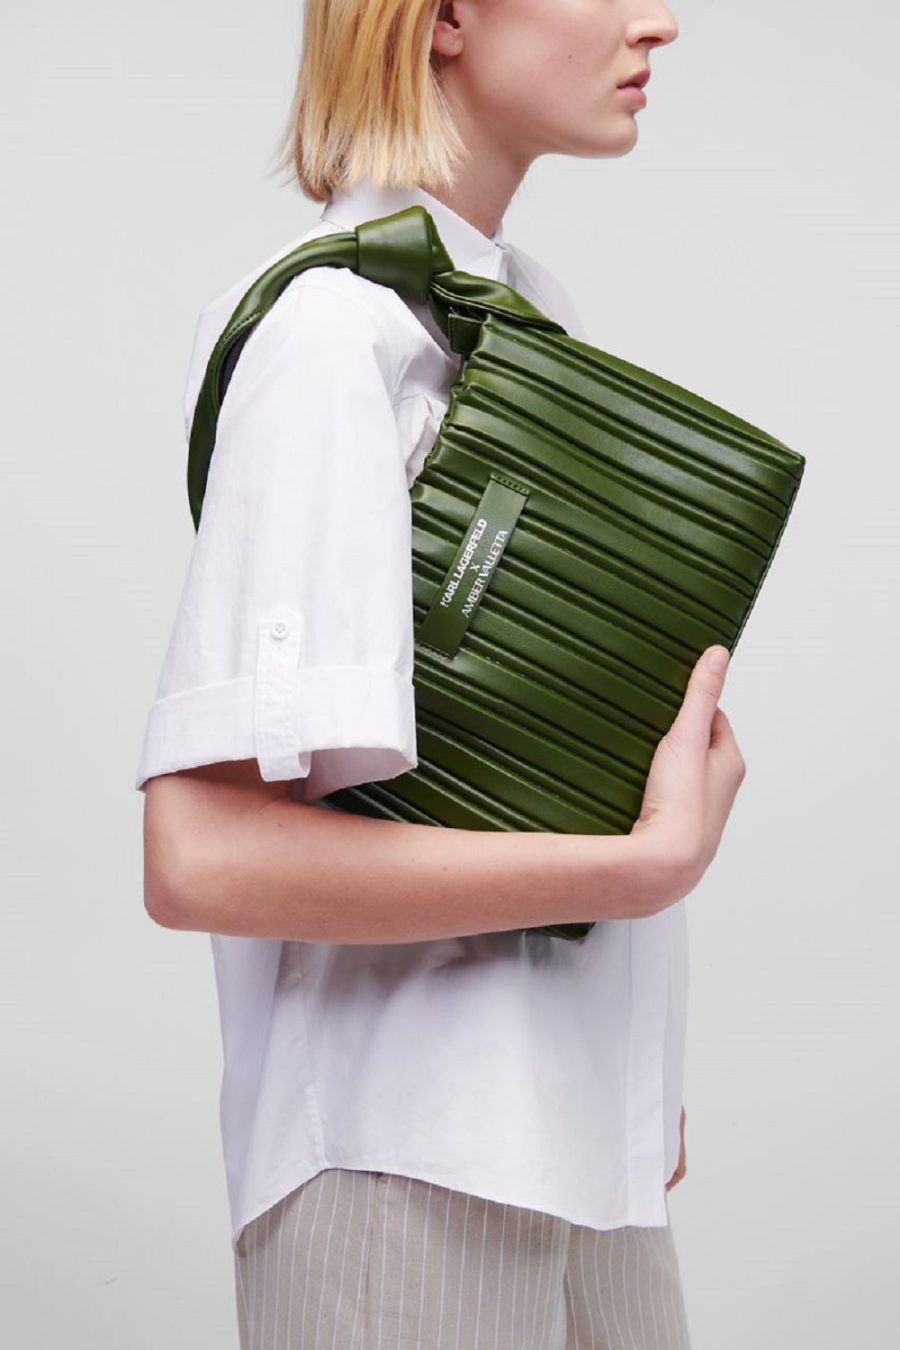 Karl Lagerfeld x Amber Valletta Klxav Pleated Clutch Woman Handbag